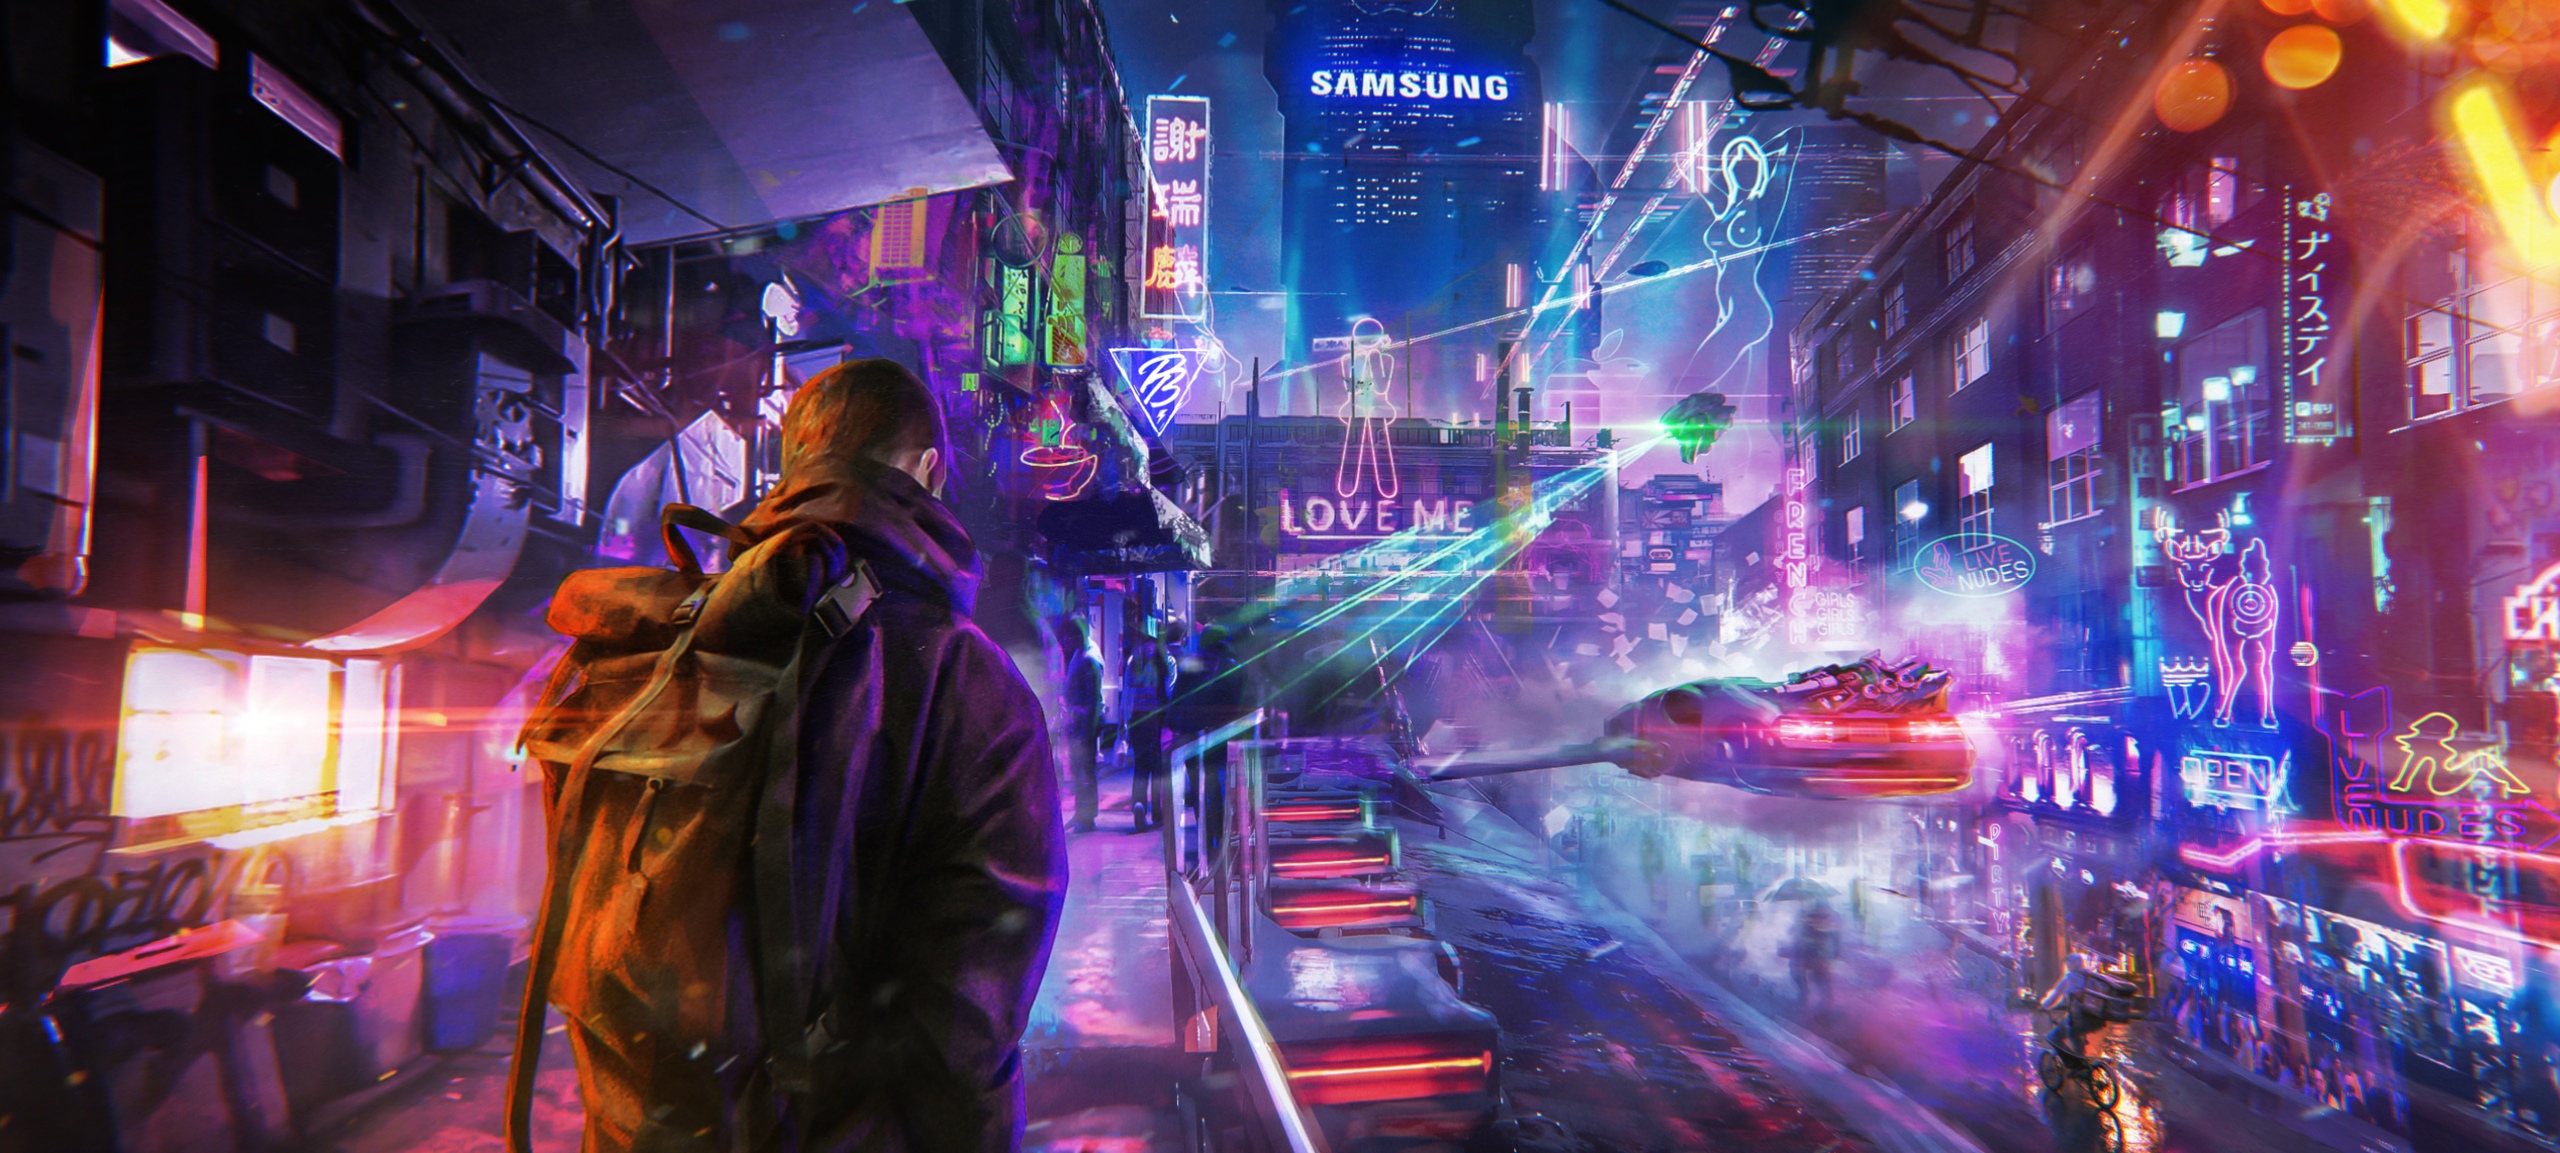 General 2560x1153 men jacket backpacks futuristic futuristic city city cyberpunk artwork digital art photoshopped people night street Samsung building neon Pavel Bondarenko ultrawide